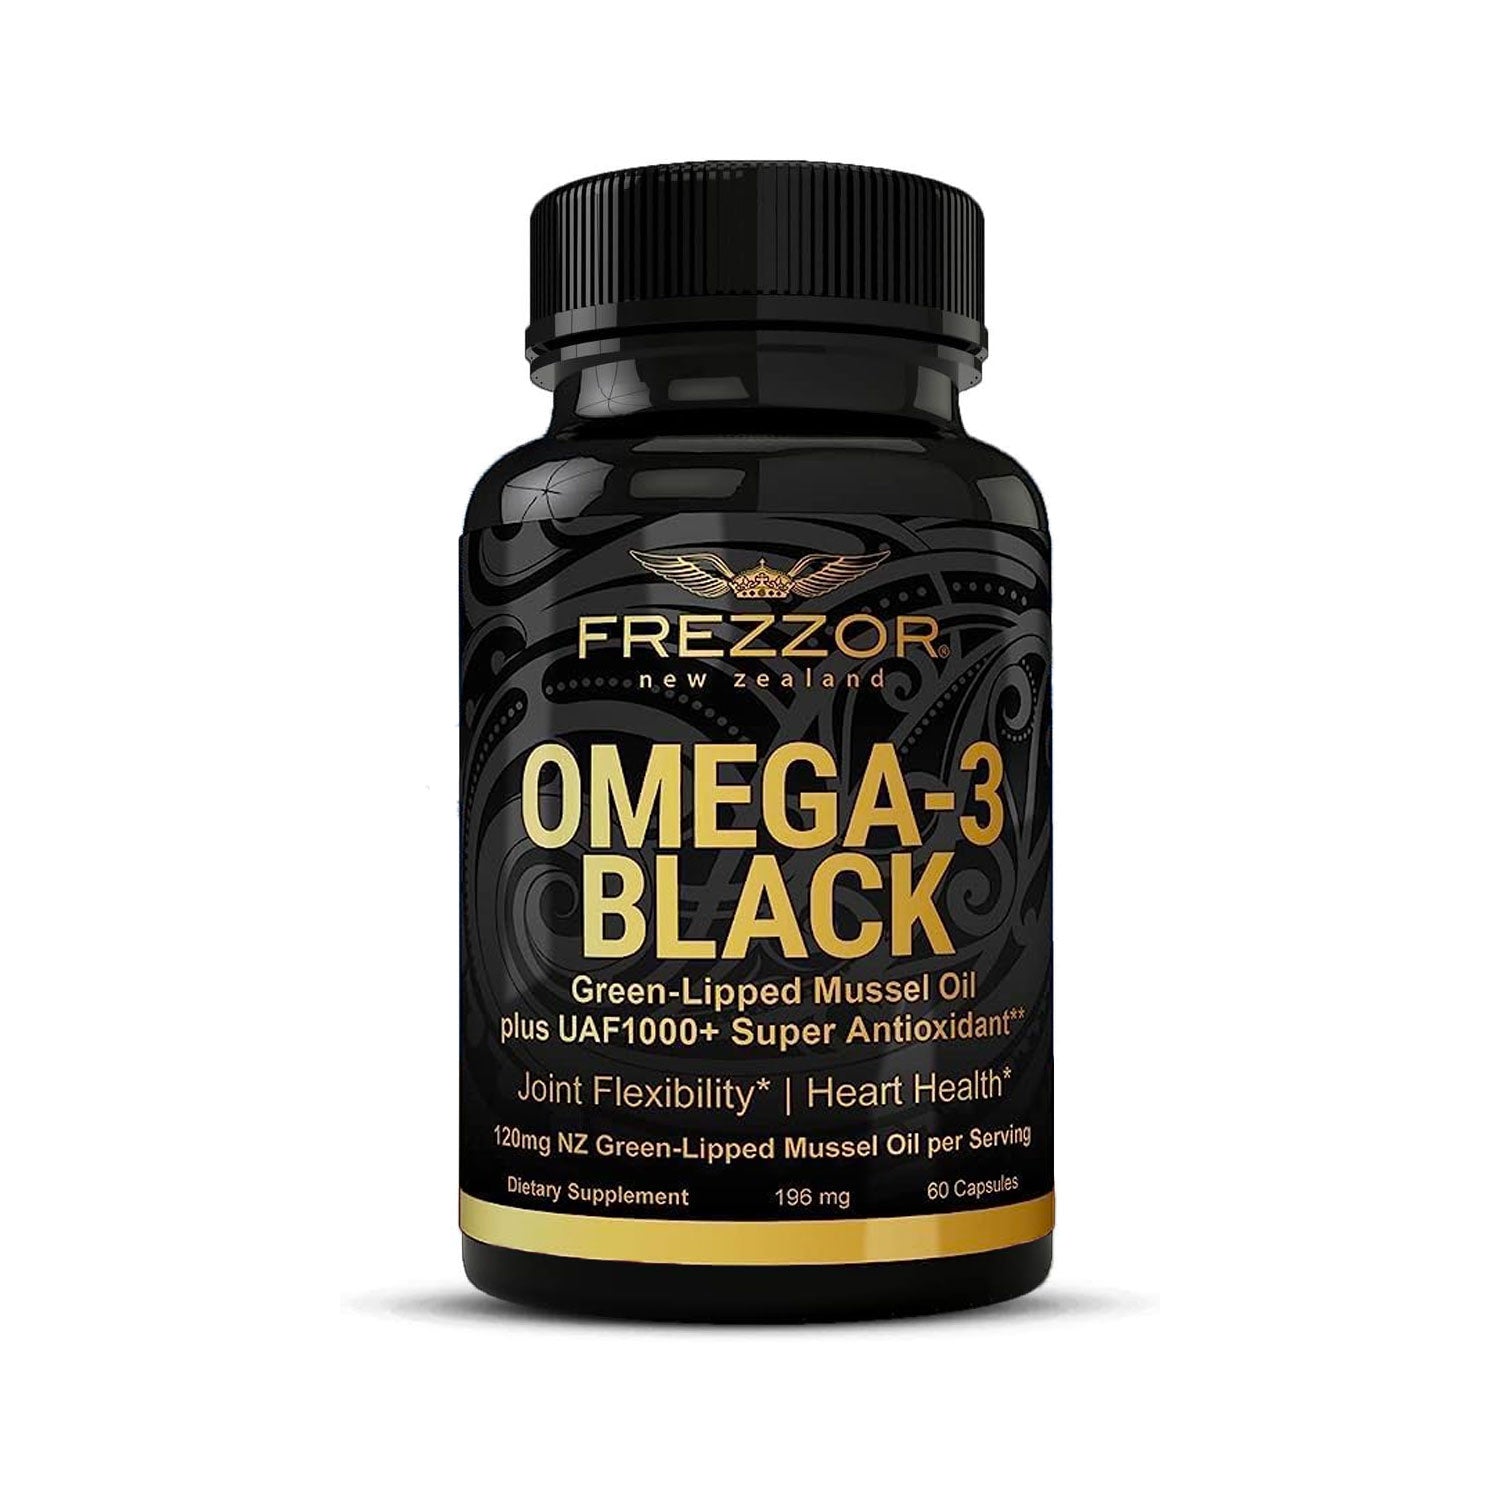 FREZZOR Omega 3 Black 450mg (60 Softgel Capsules)